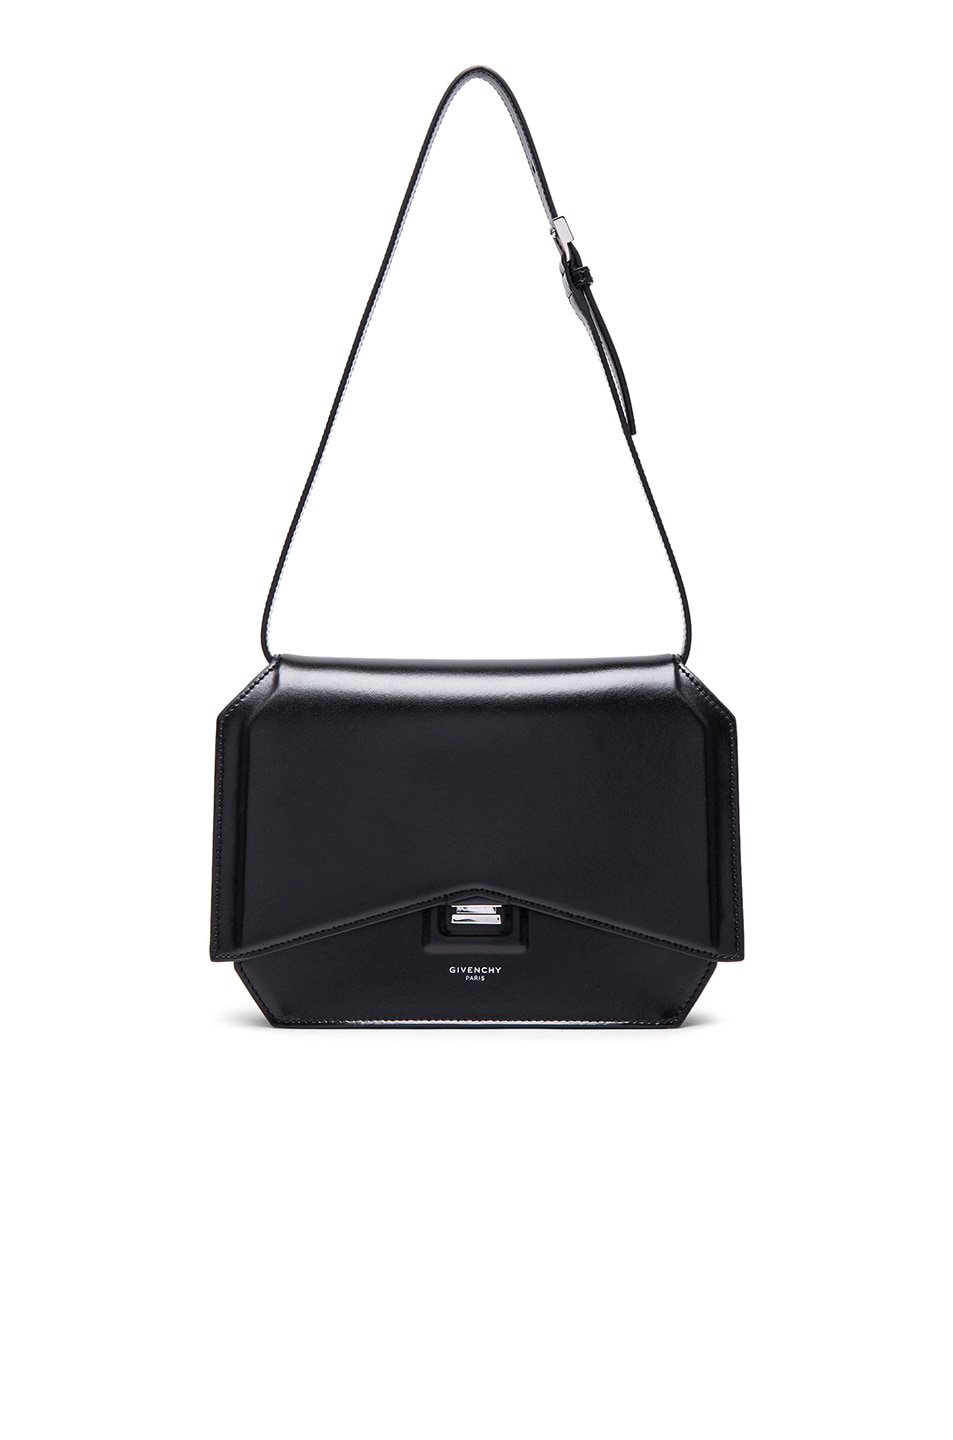 Image 1 of Givenchy Medium Bow Cut Bag in Black